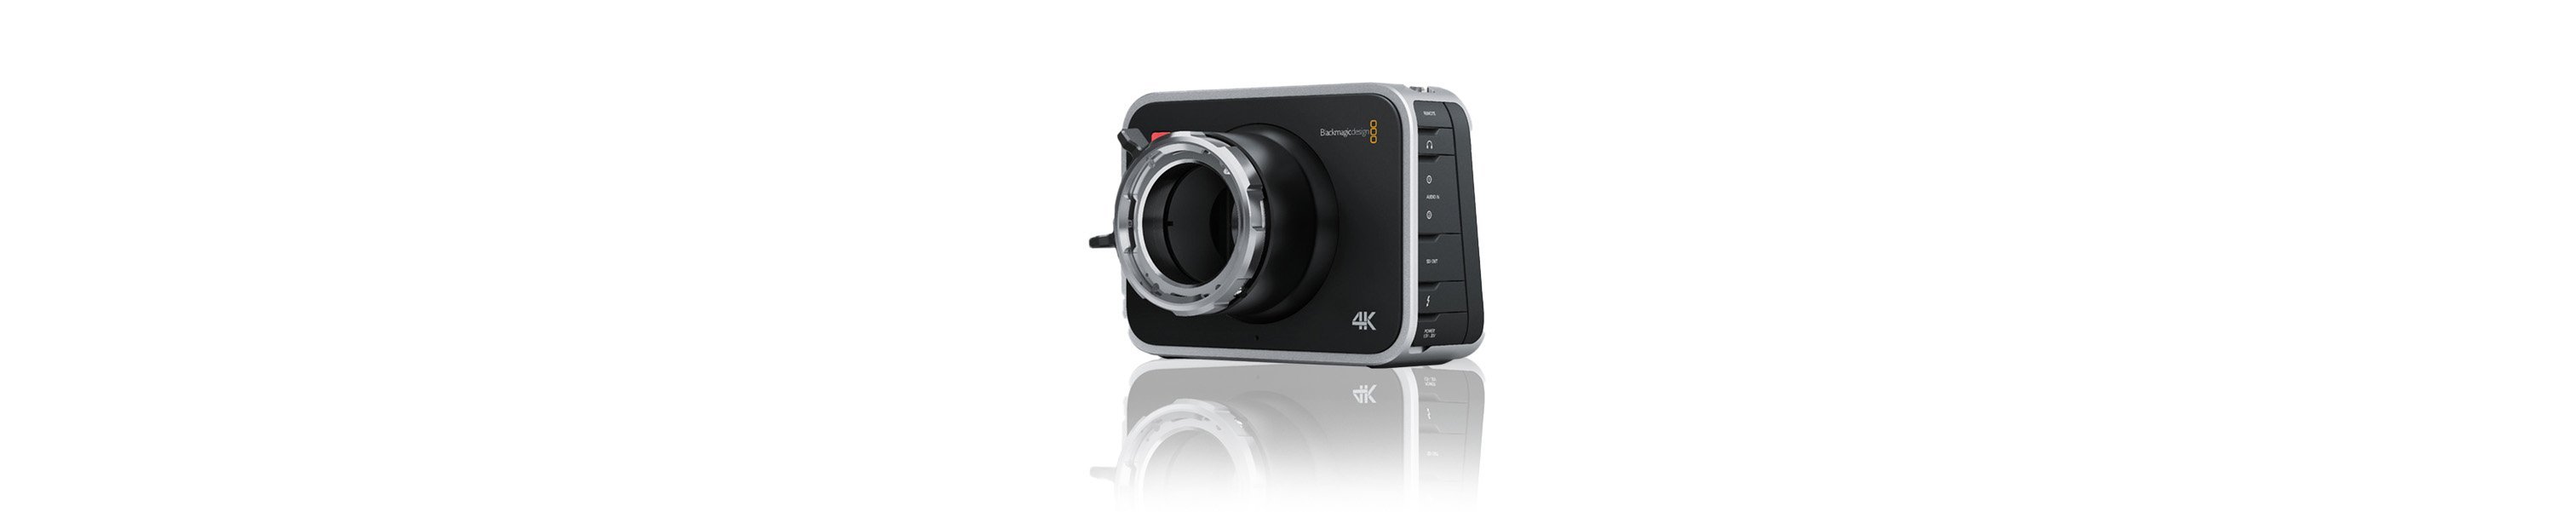 Blackmagic Cinema & Production Camera 4K/6K